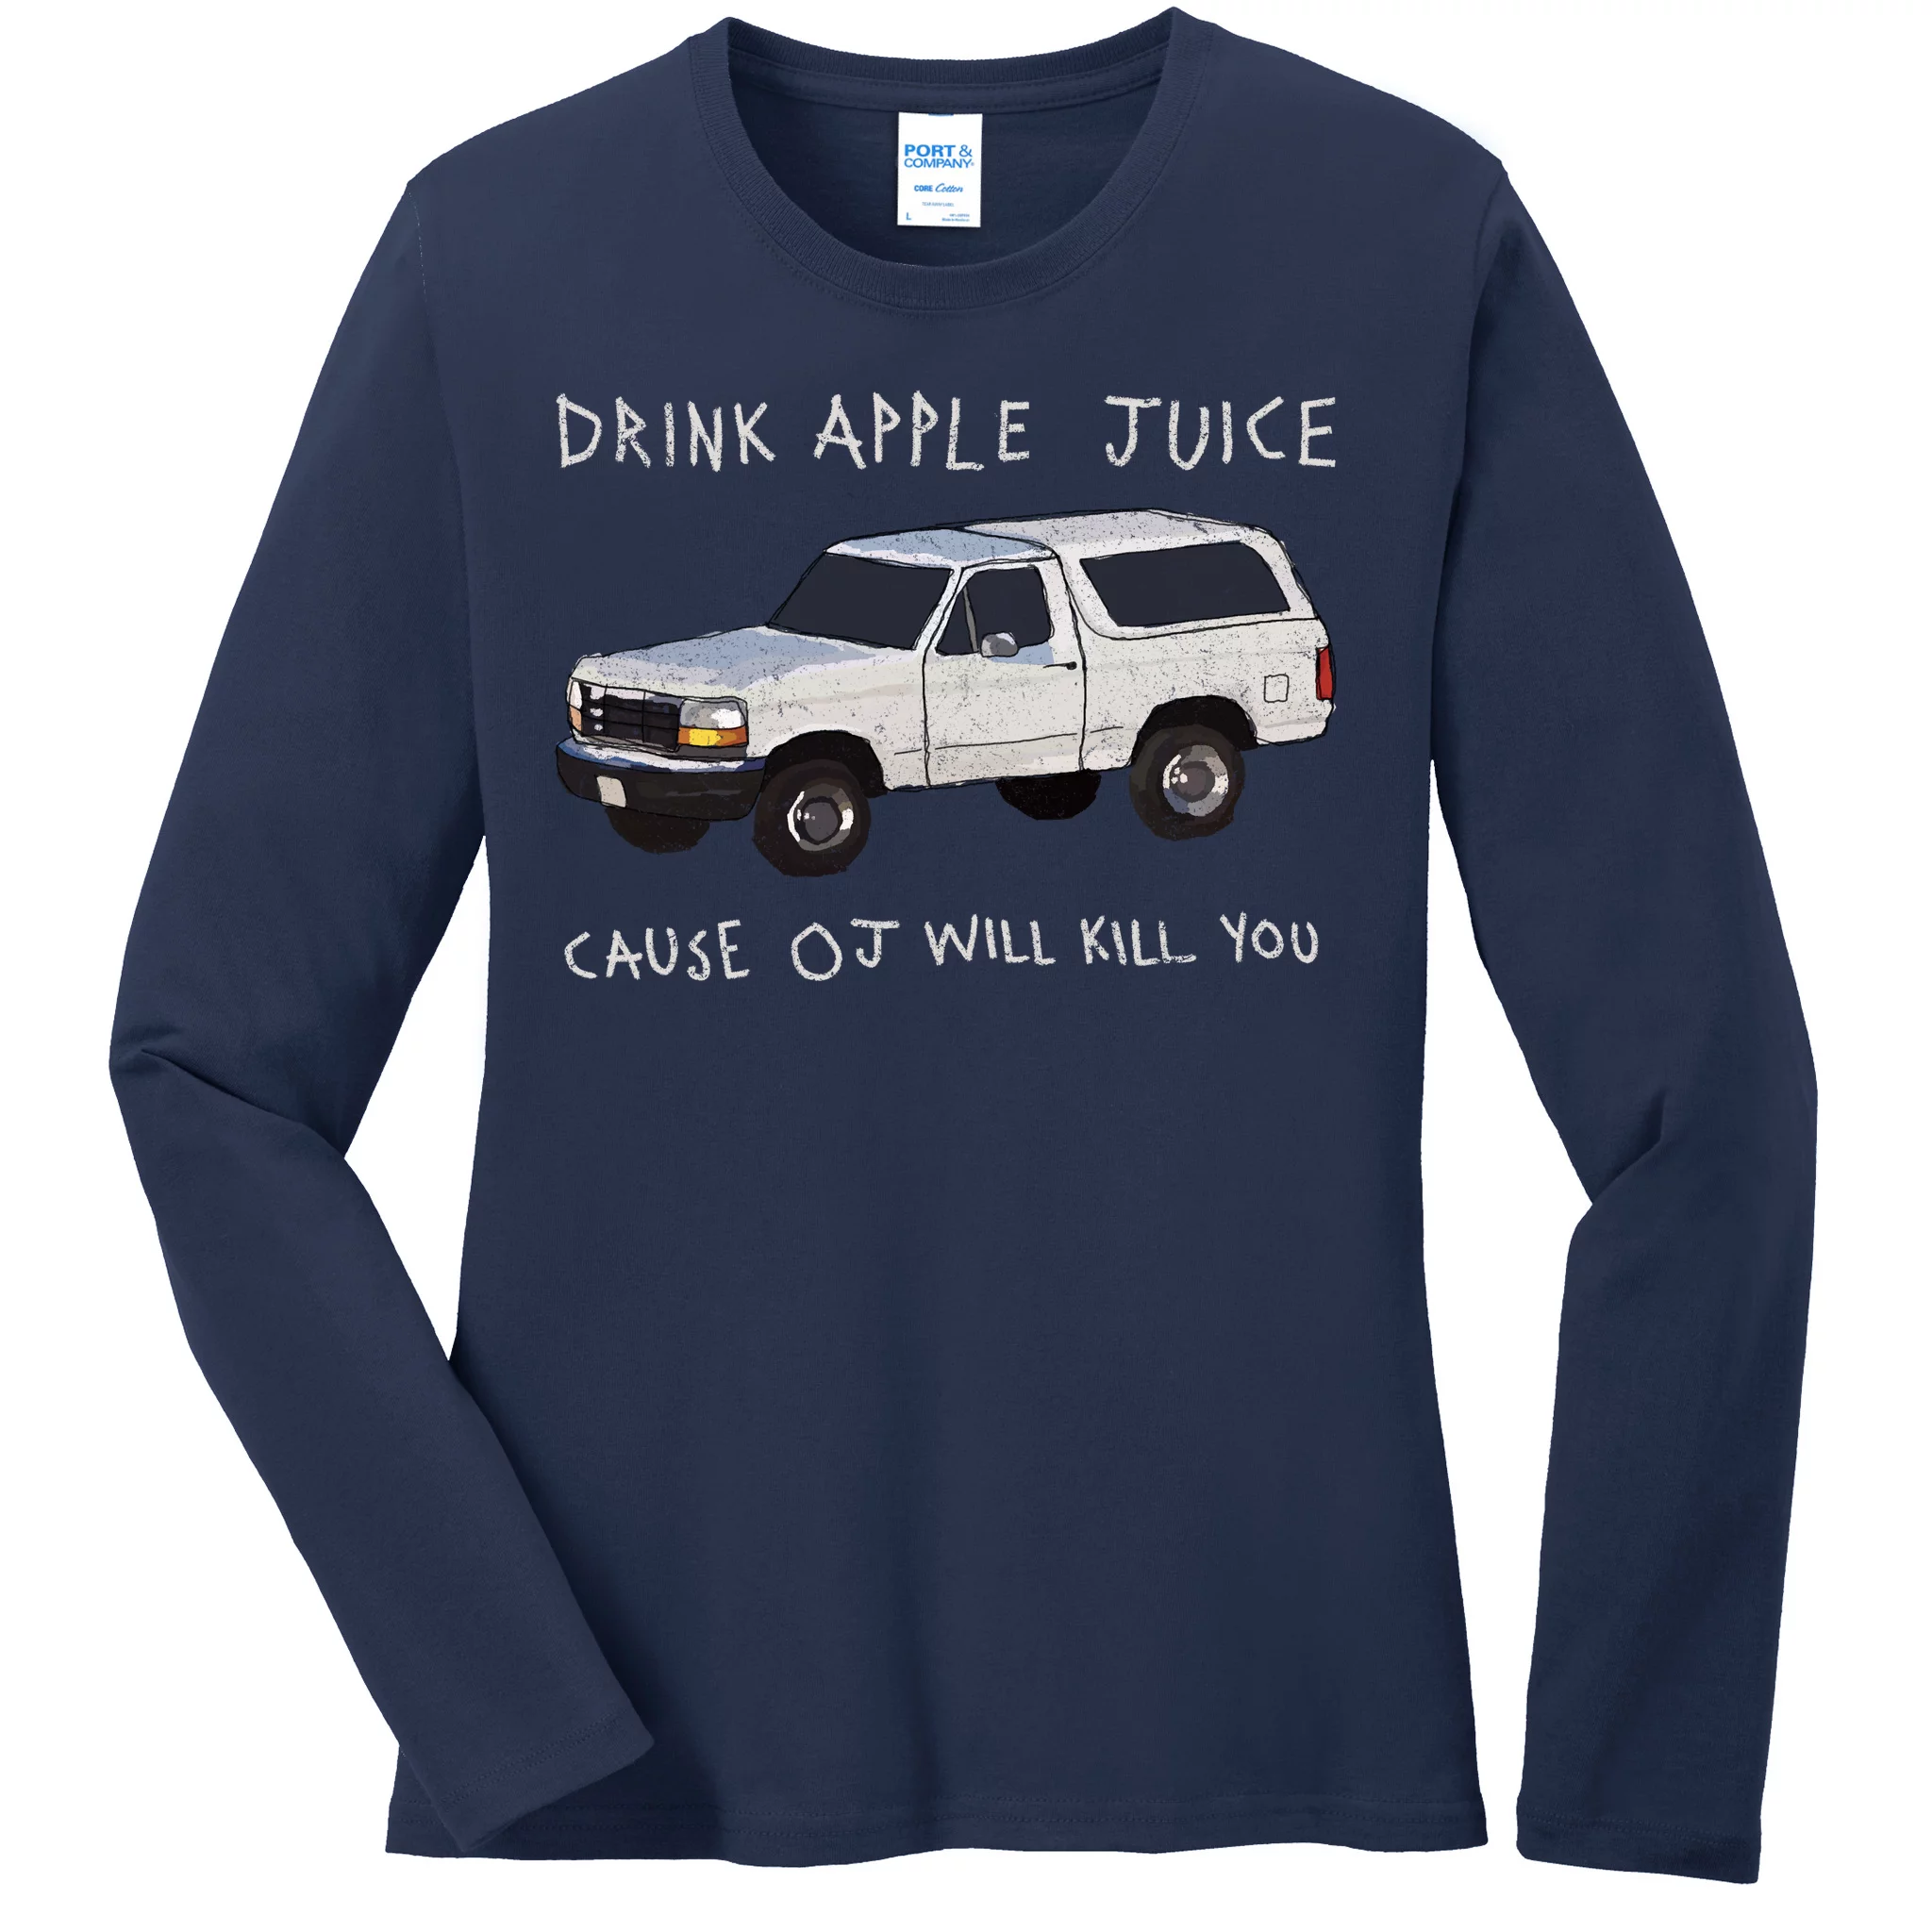 Drink Apple Juice Cause OJ Will Kill You Ladies Missy Fit Long Sleeve Shirt